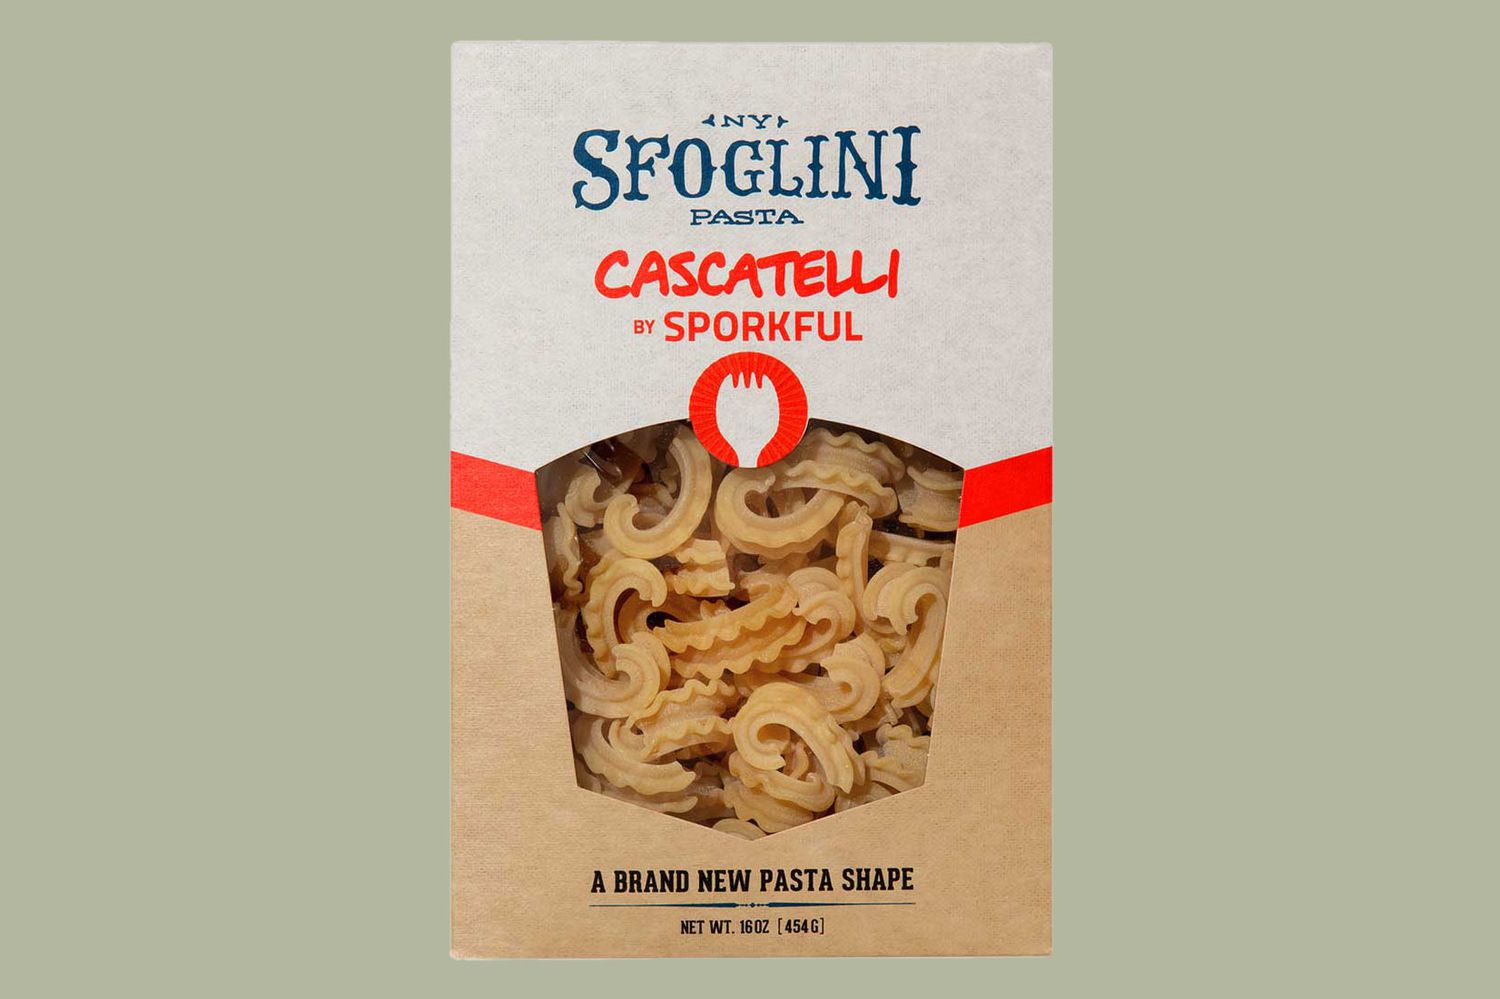 box of new cascatelli pasta shape